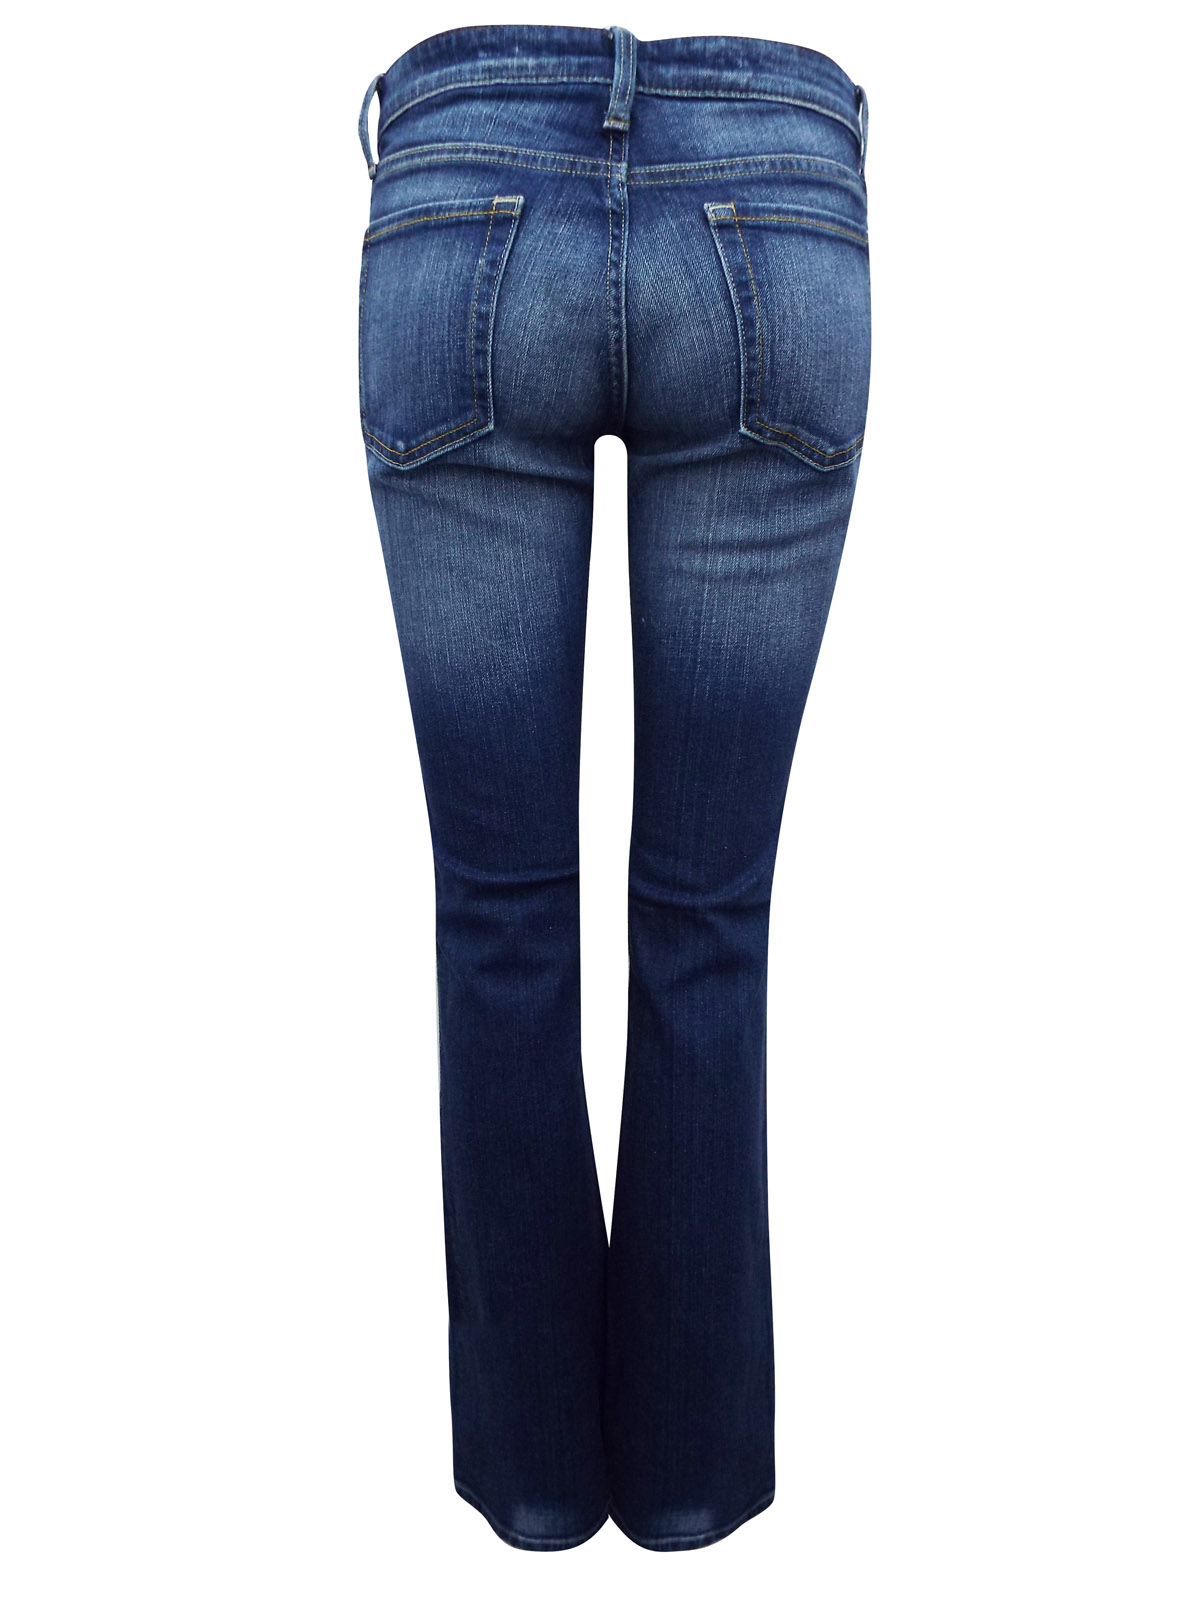 GAP INDIGO Bootcut Denim Jeans - Size 6 to 18